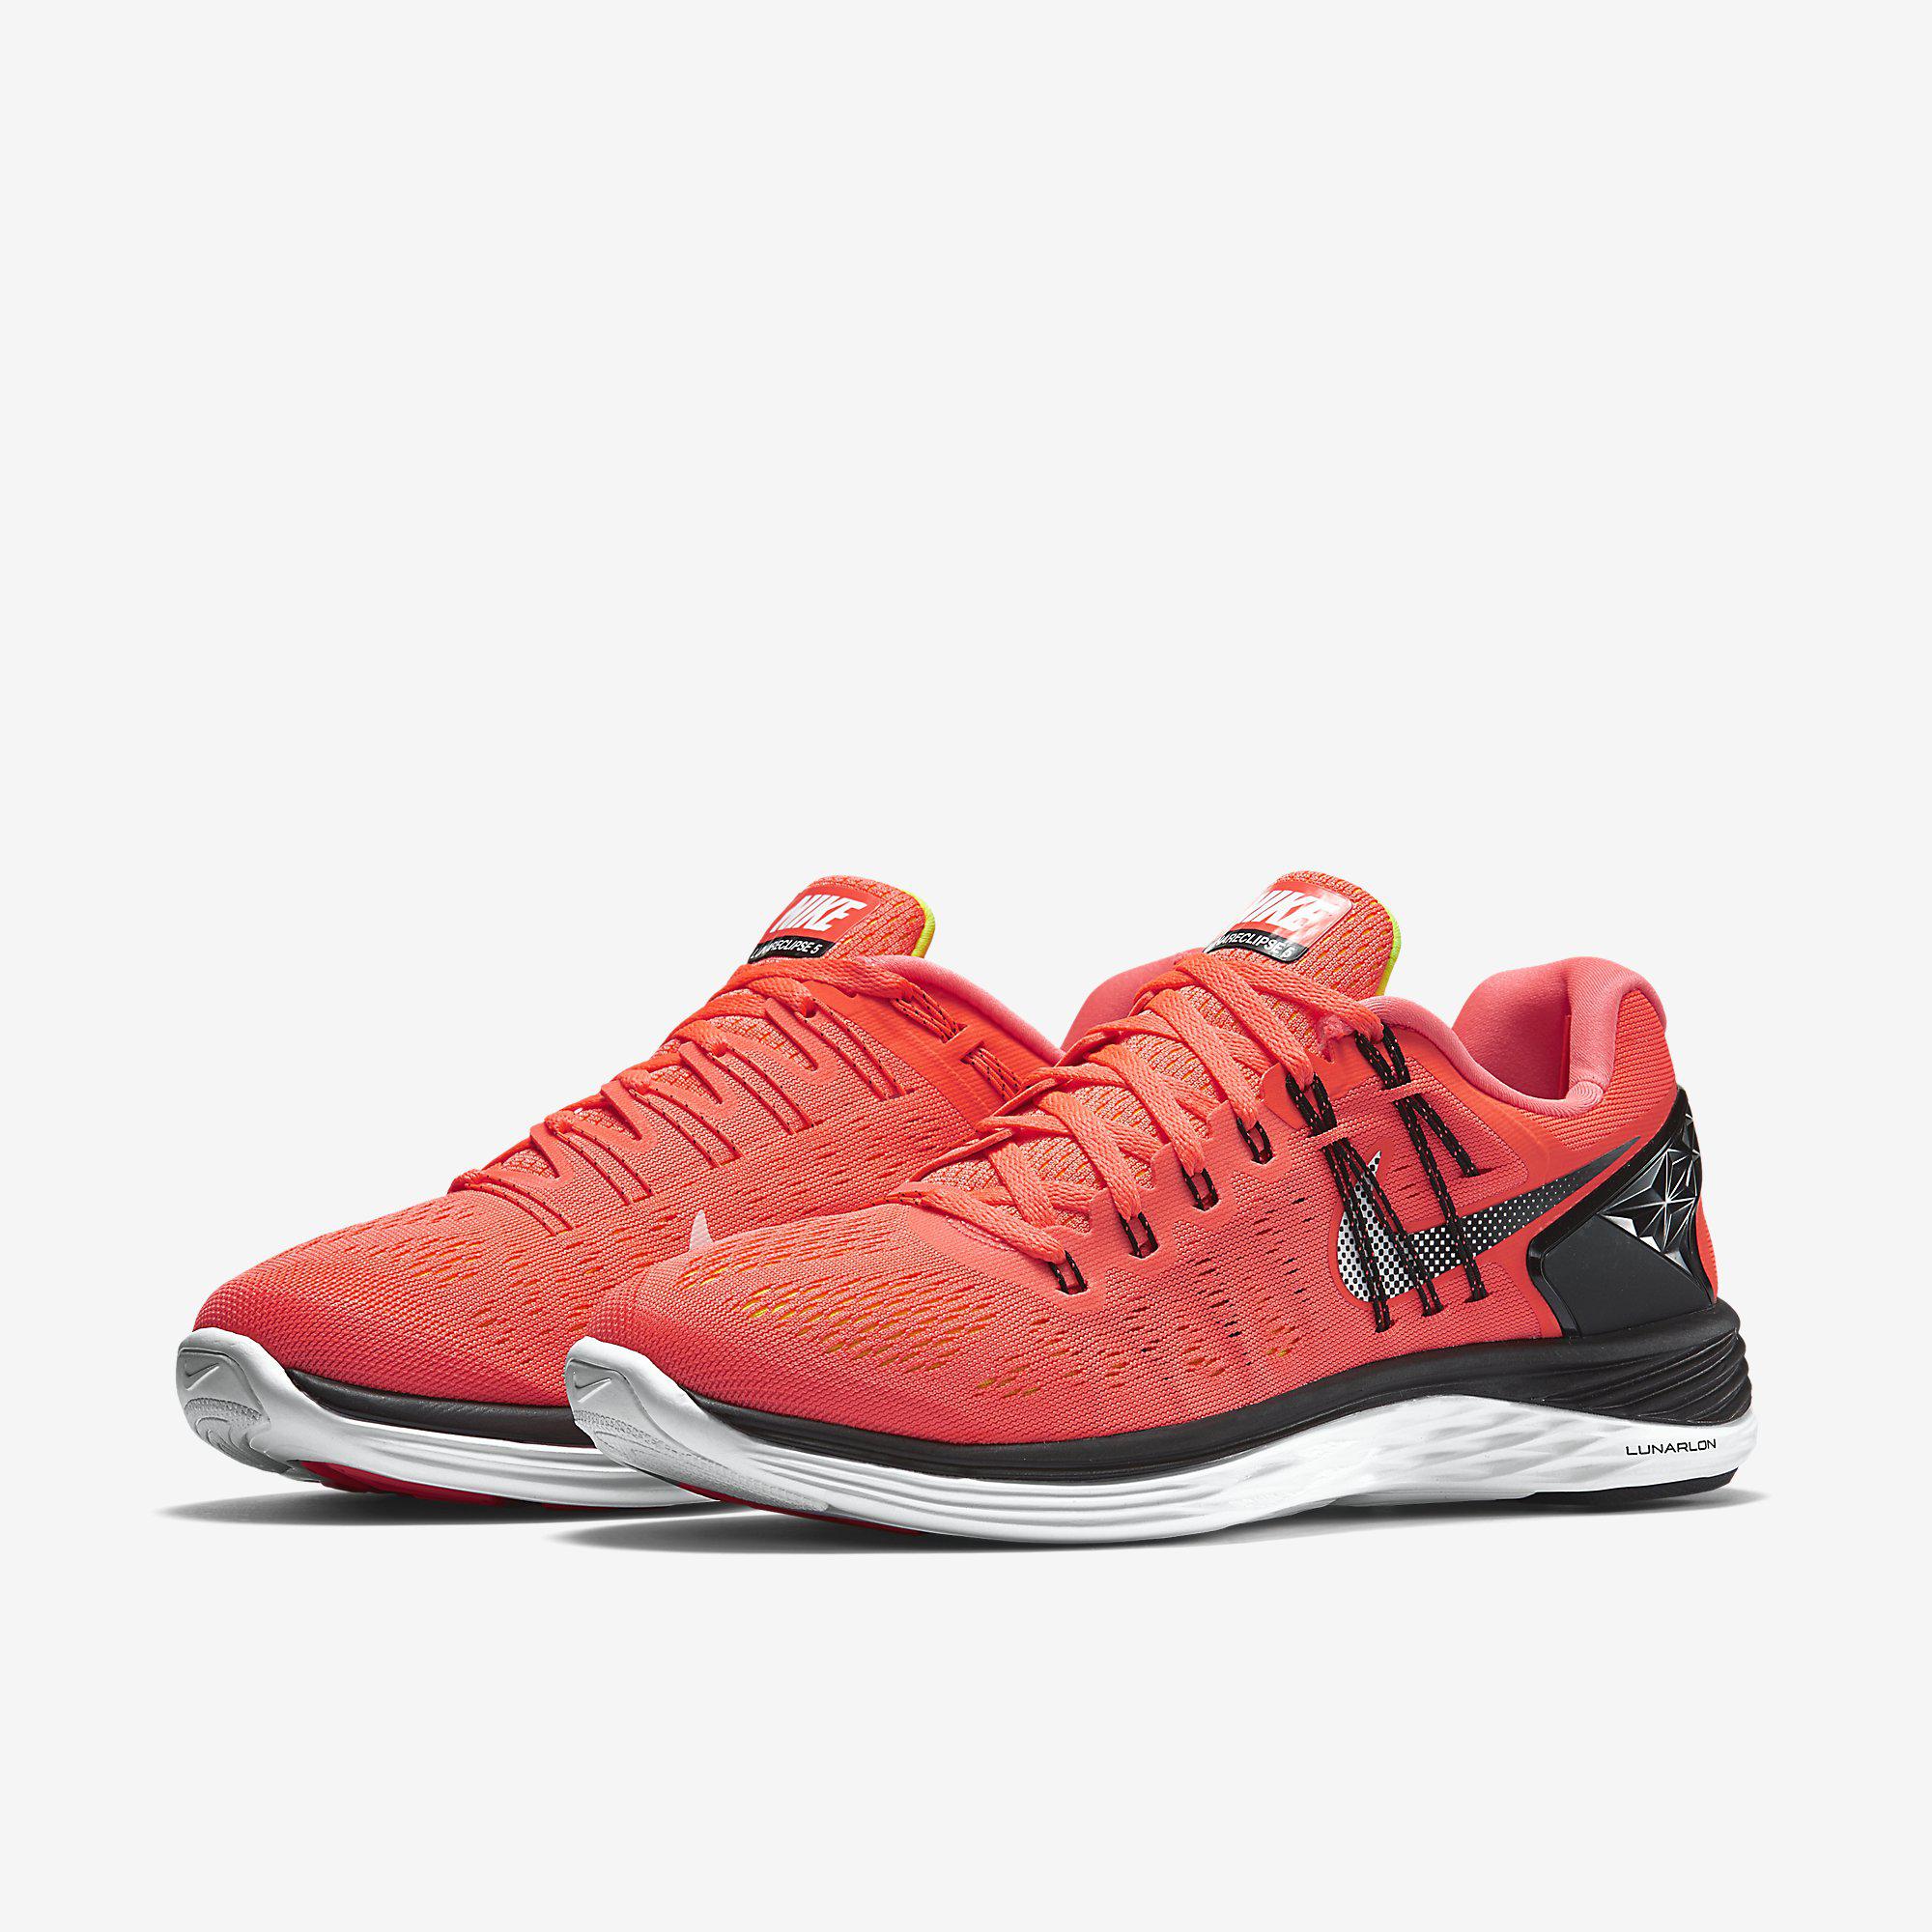 Nike LunarEclipse Running Shoes - Hot Lava/Volt/White - Tennisnuts.com